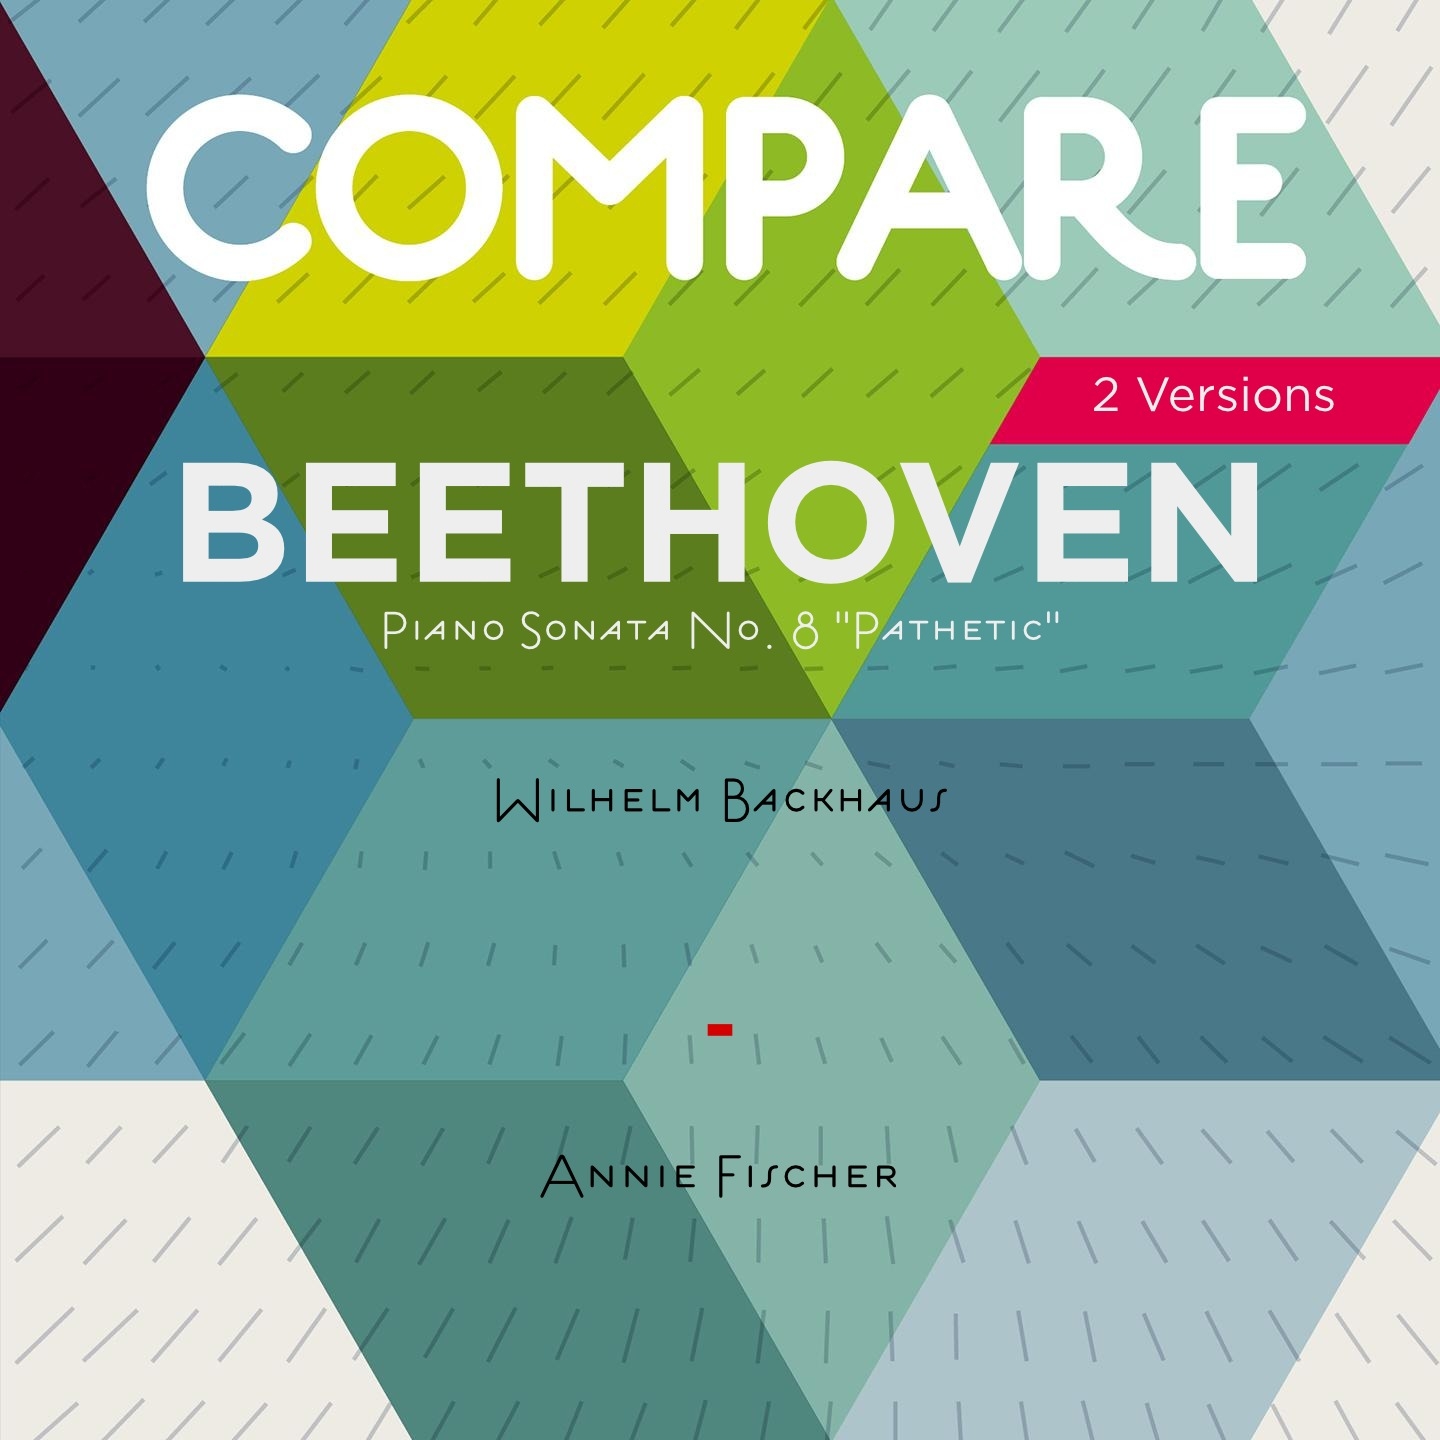 Beethoven: Piano Sonata No. 8 "Pathetic", Wilhelm Backhaus vs. Annie Fischer